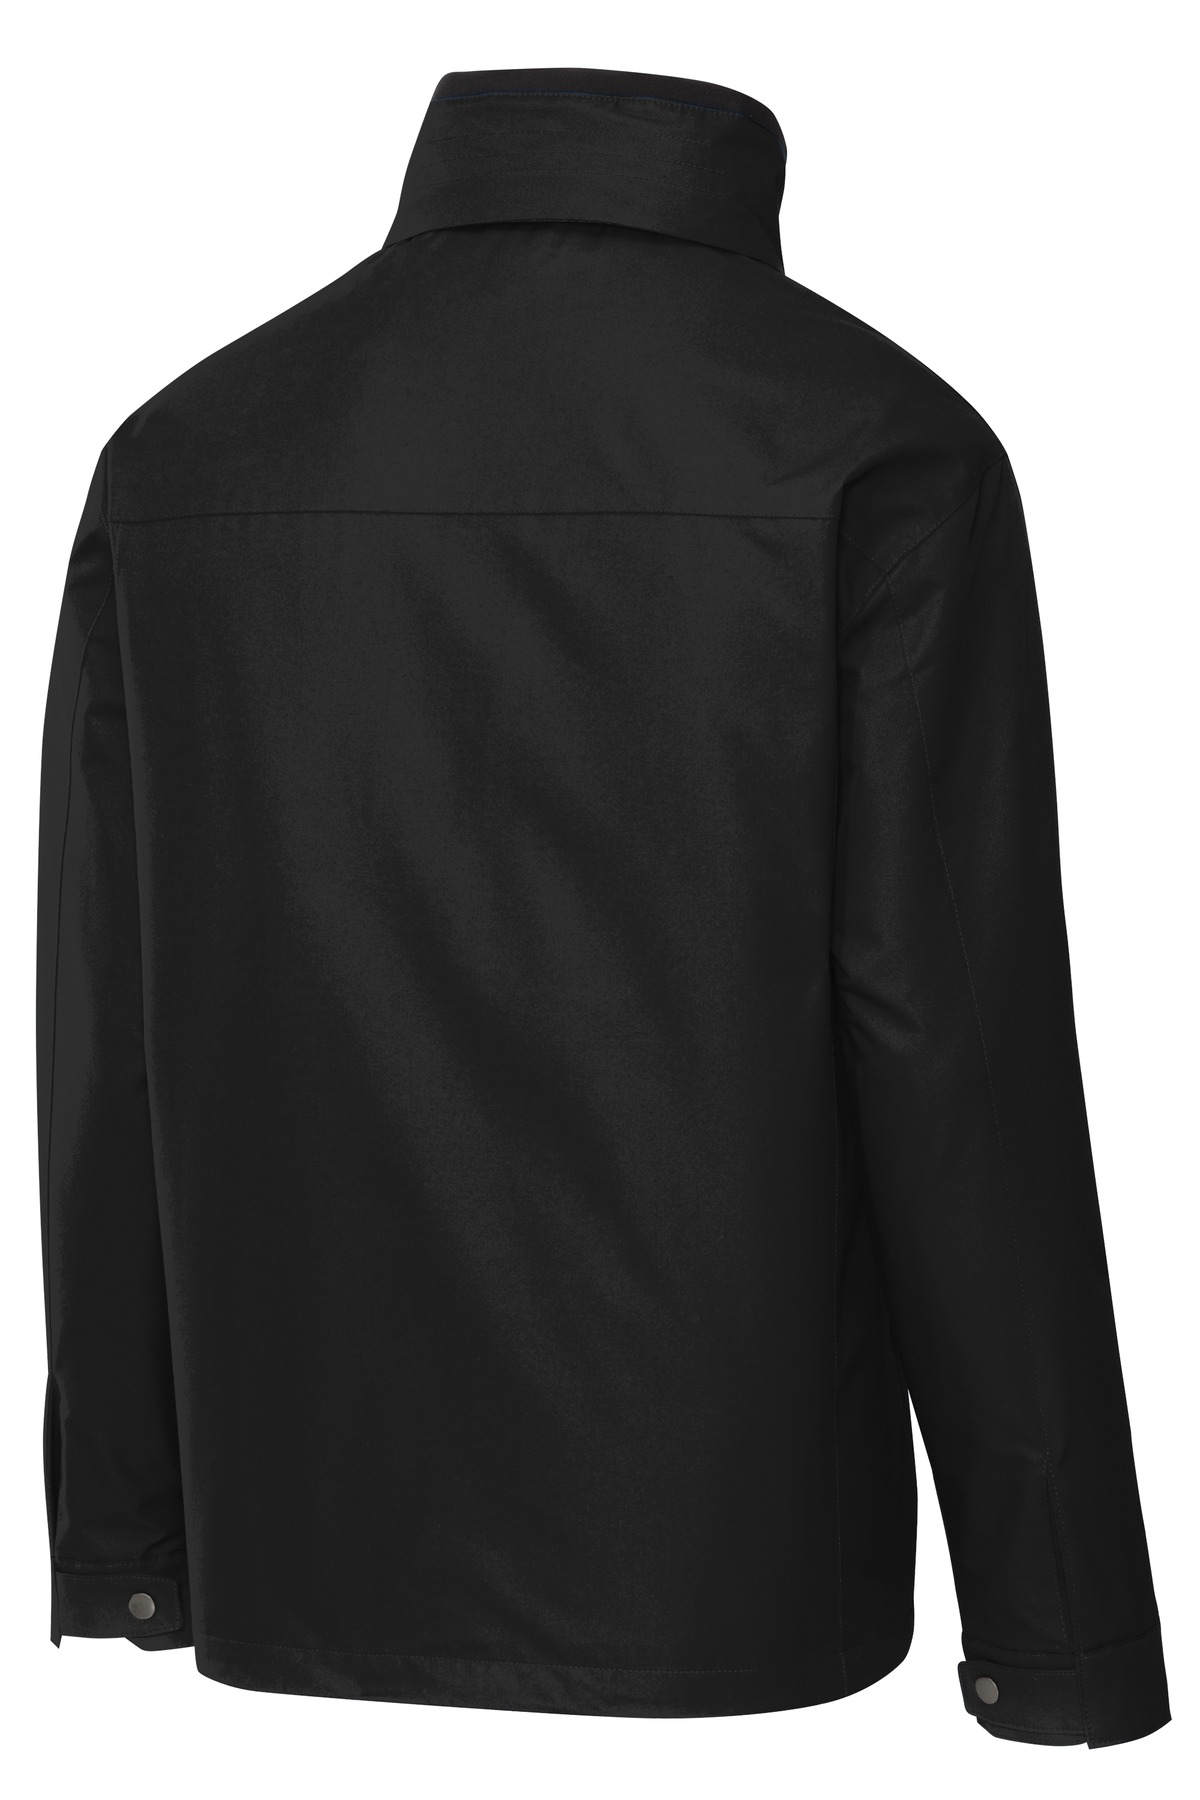 Port Authority ® Successor™ Jacket. J701 - Custom Shirt Shop